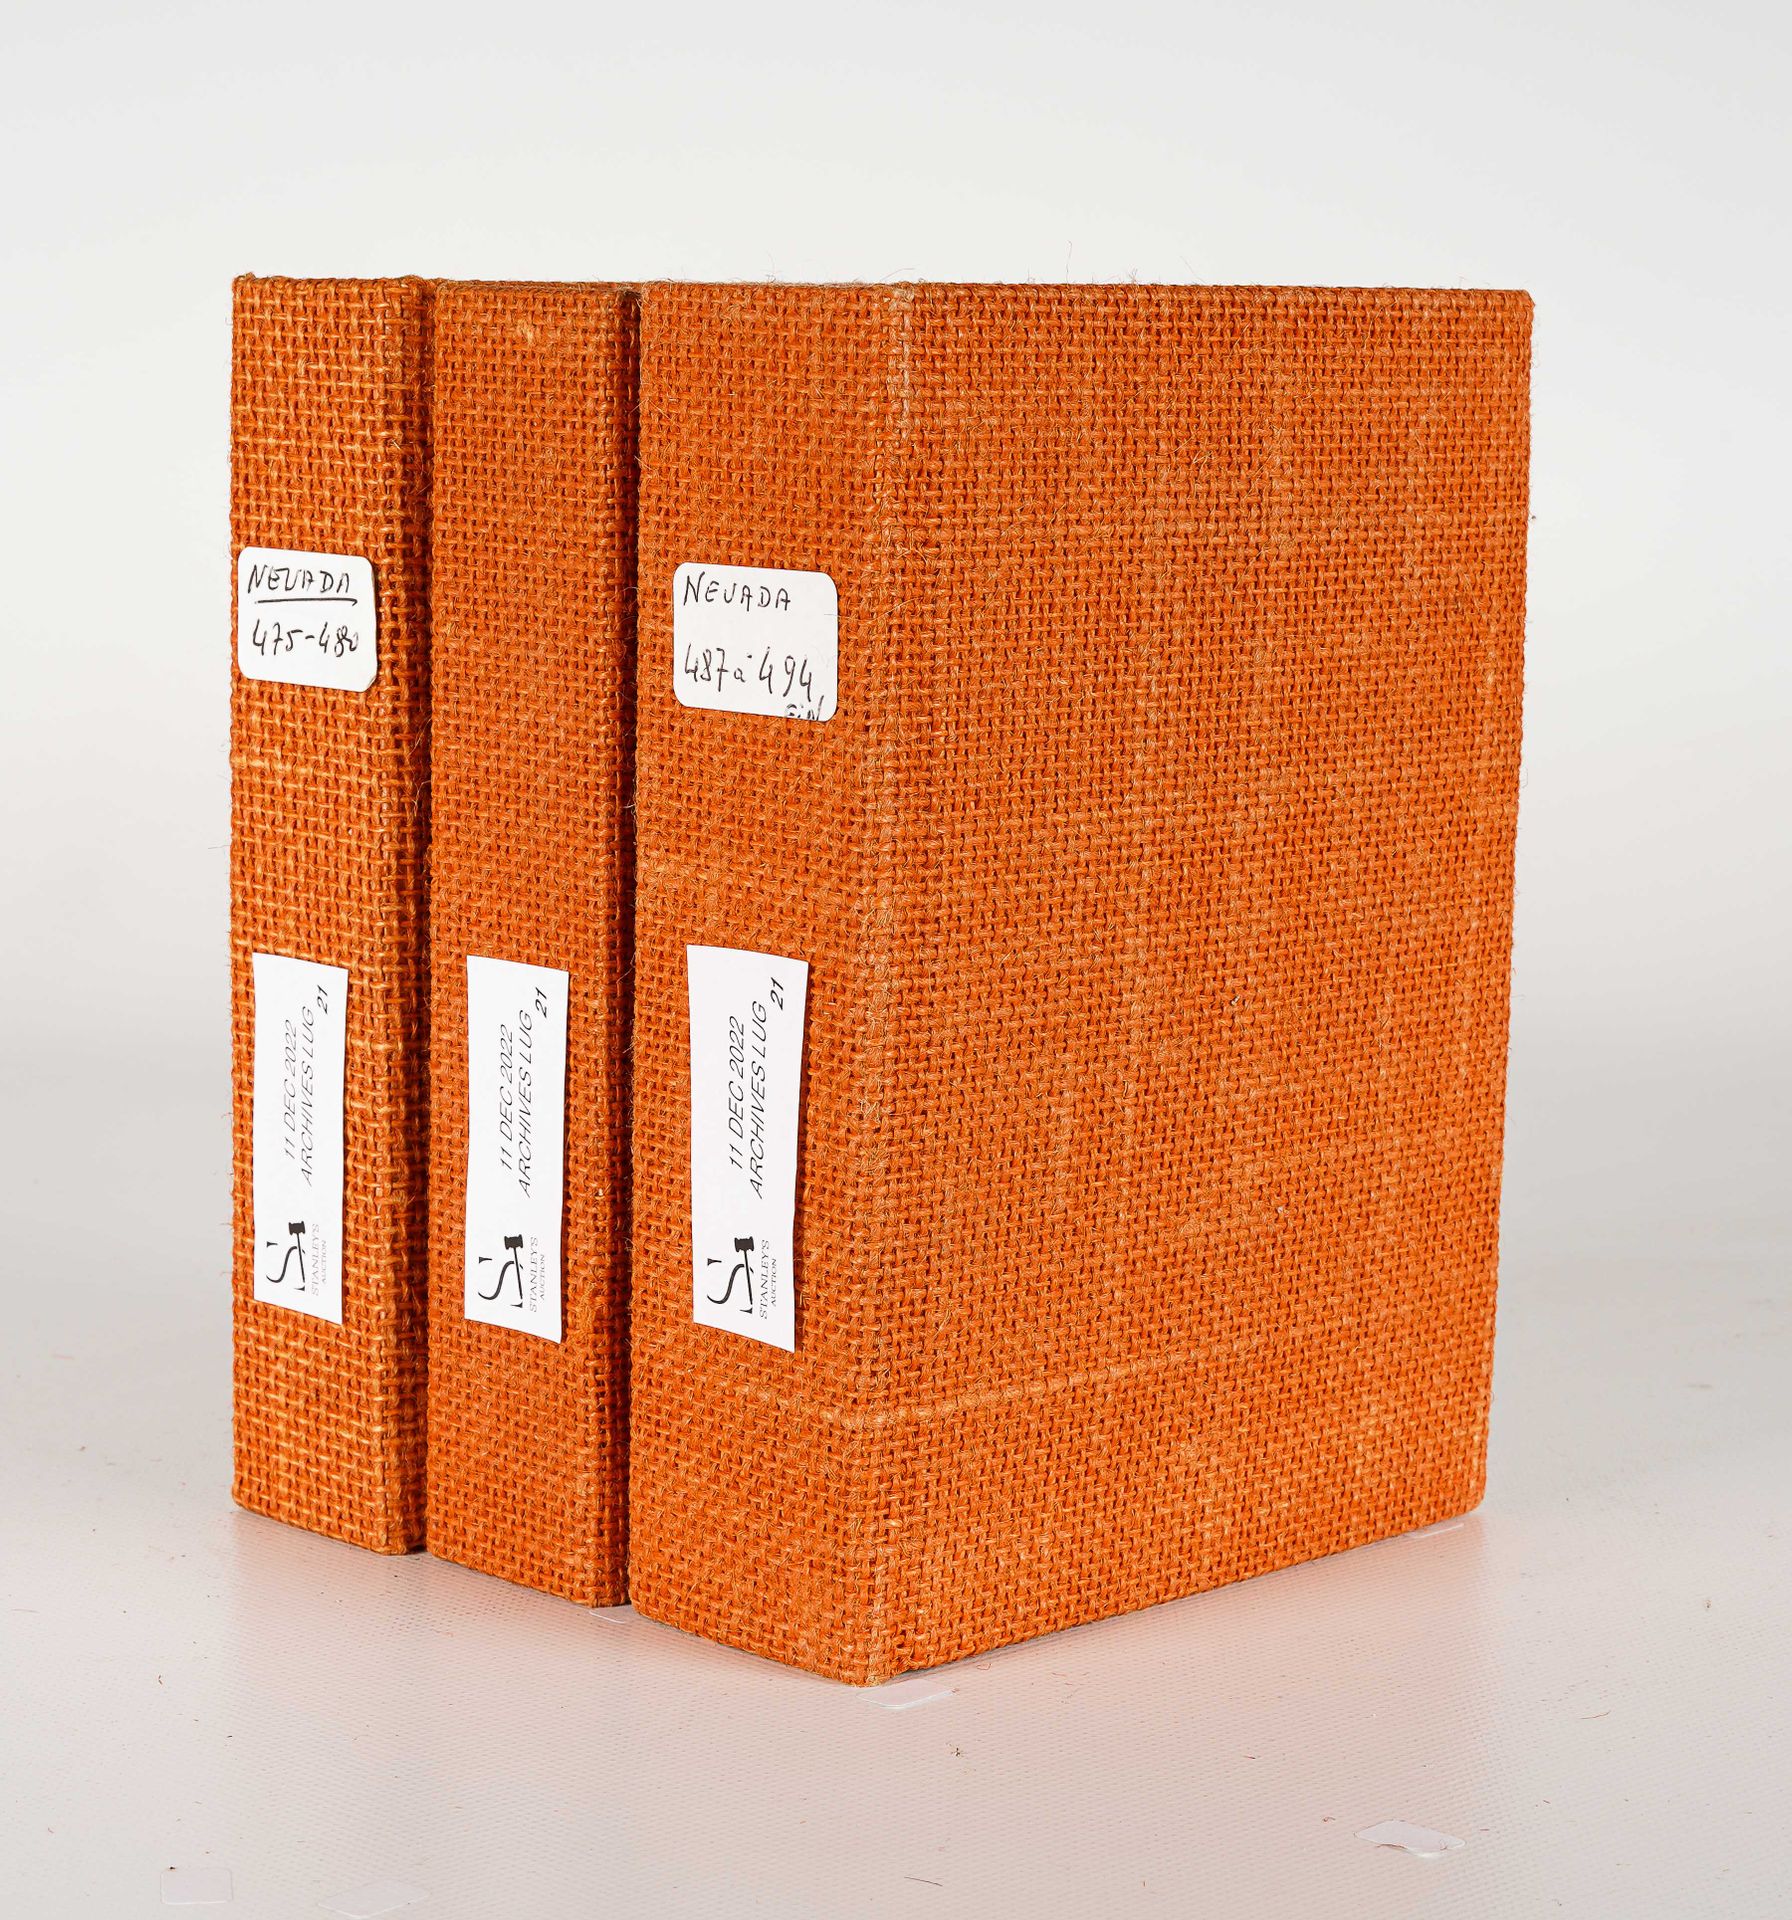 LUG SEMIC, ARCHIVES COMICS 三个LUG活页夹，包括NEVADA第475至494号，橙色布，尺寸H 18 x 13厘米，原标签丢失